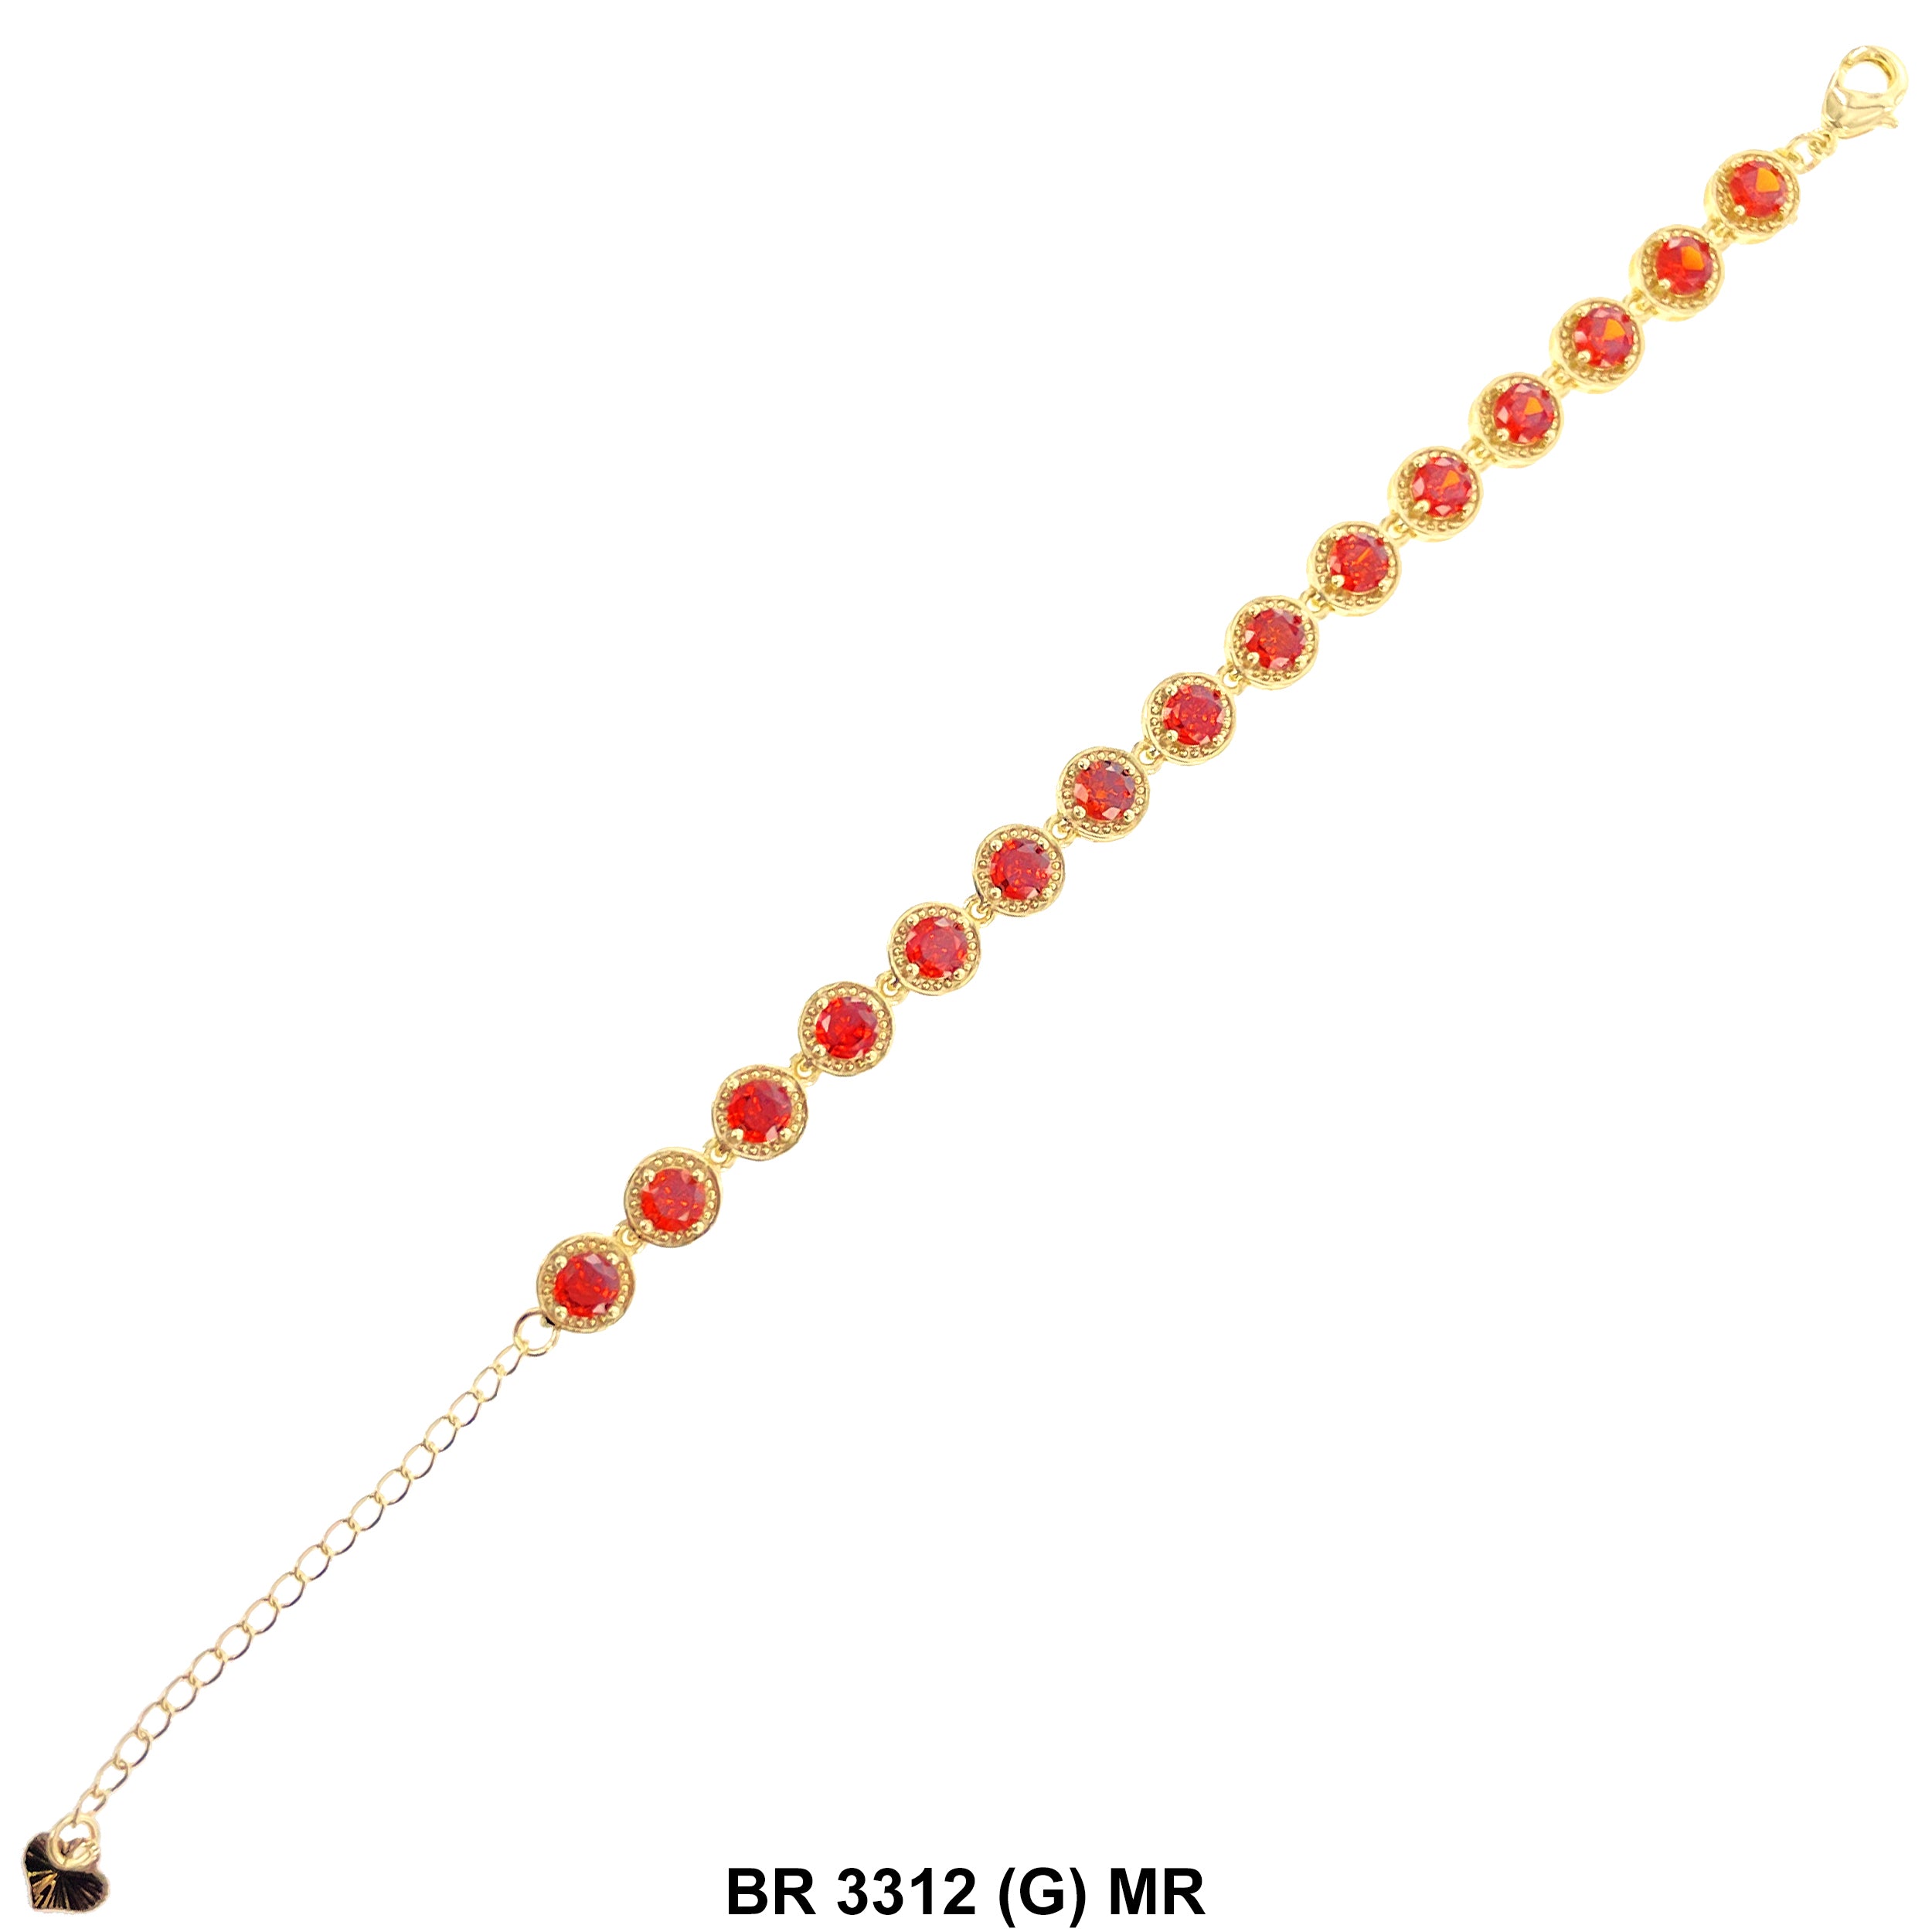 Cubic Zirconia Tennis Bracelet BR 3312 (G) MR